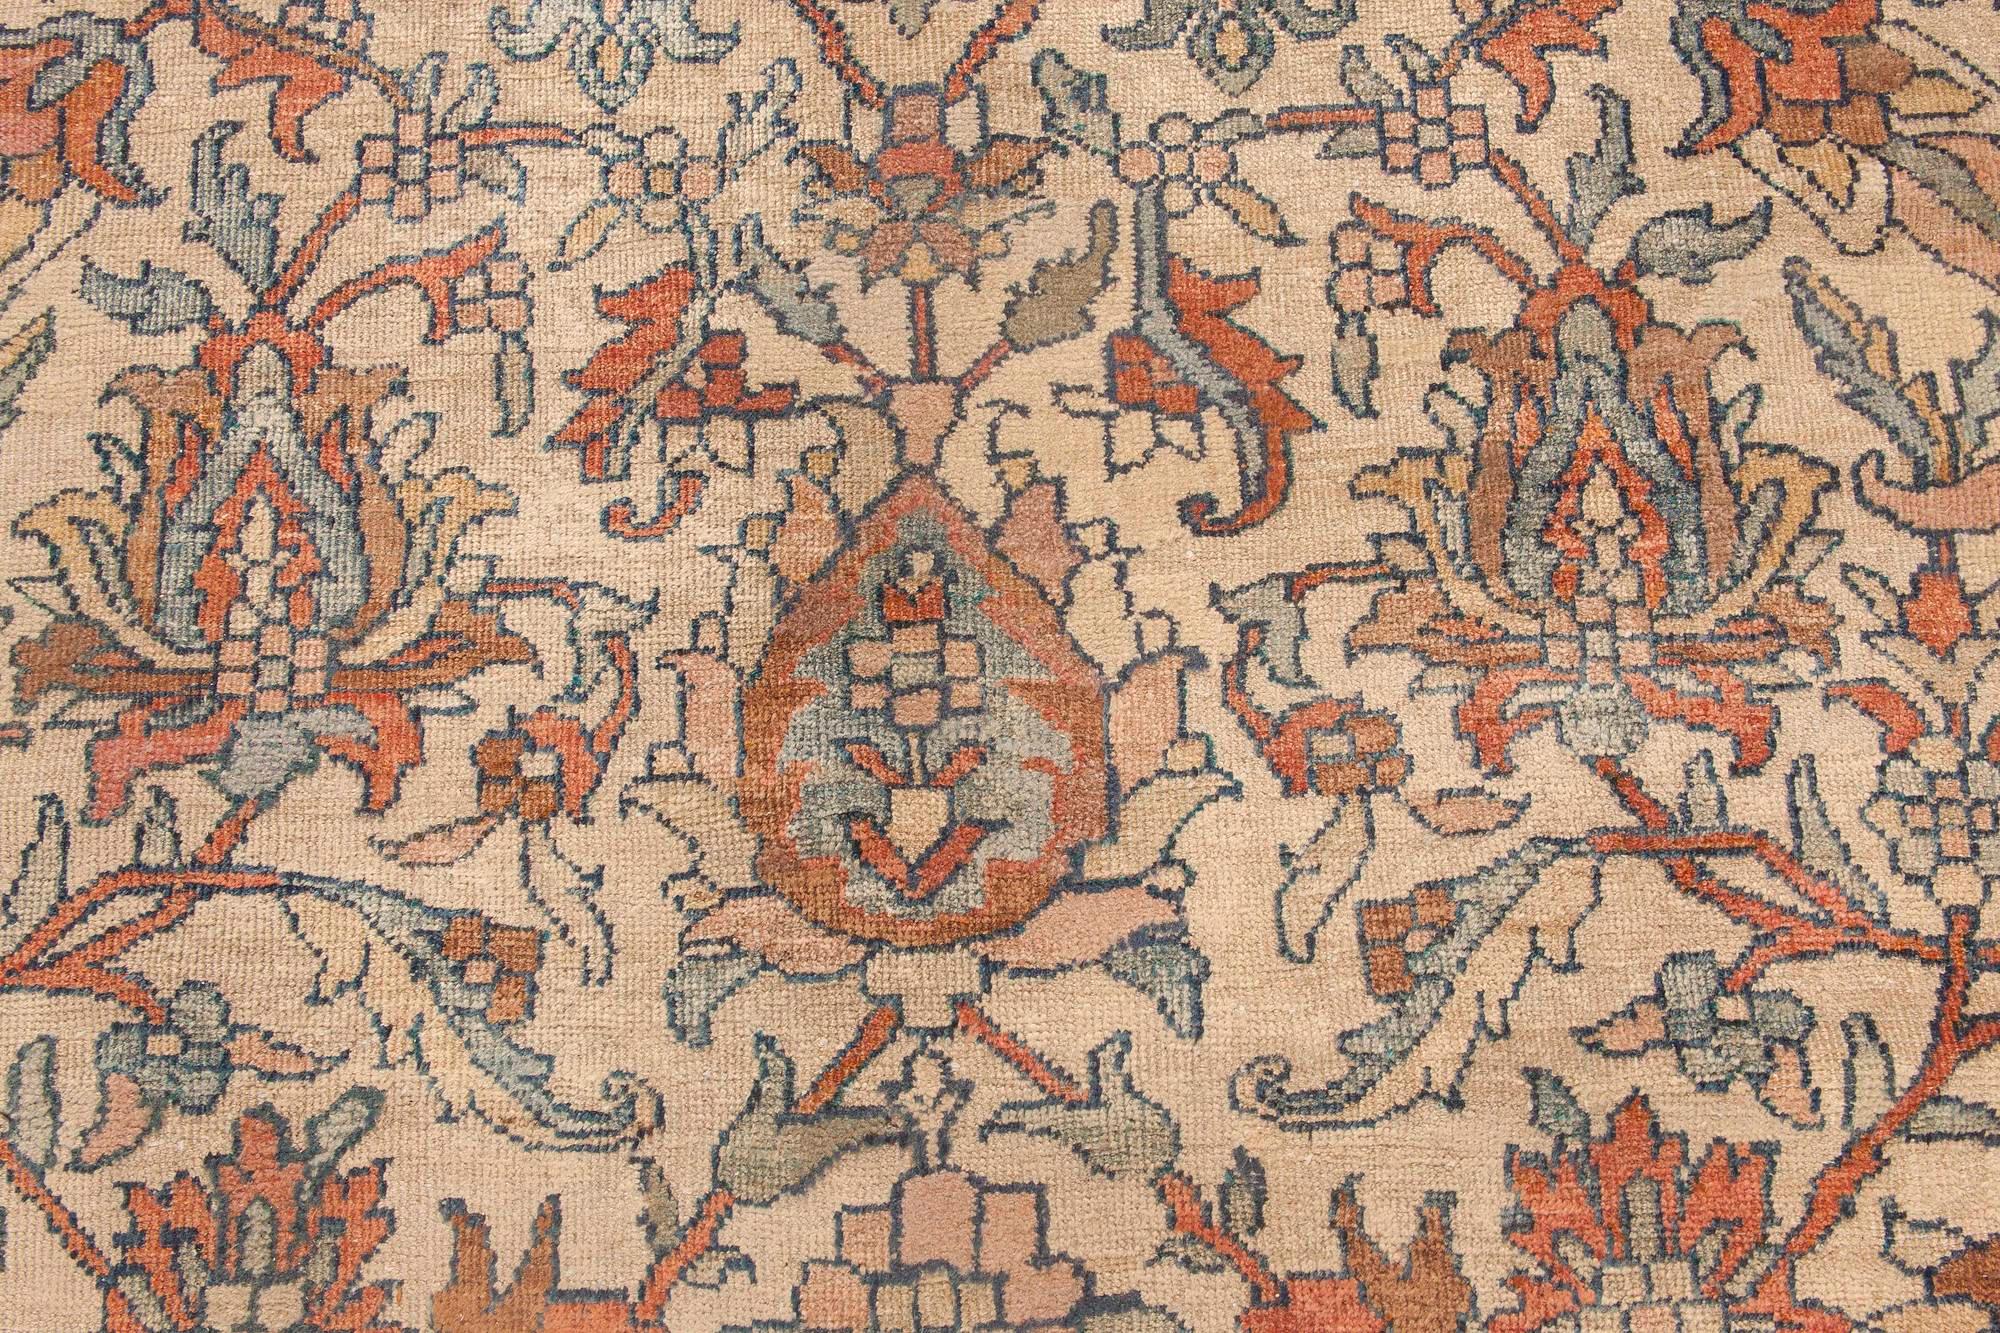 Antique Persian Sultanabad Botanic Handmade Wool Carpet
Size: 10'9